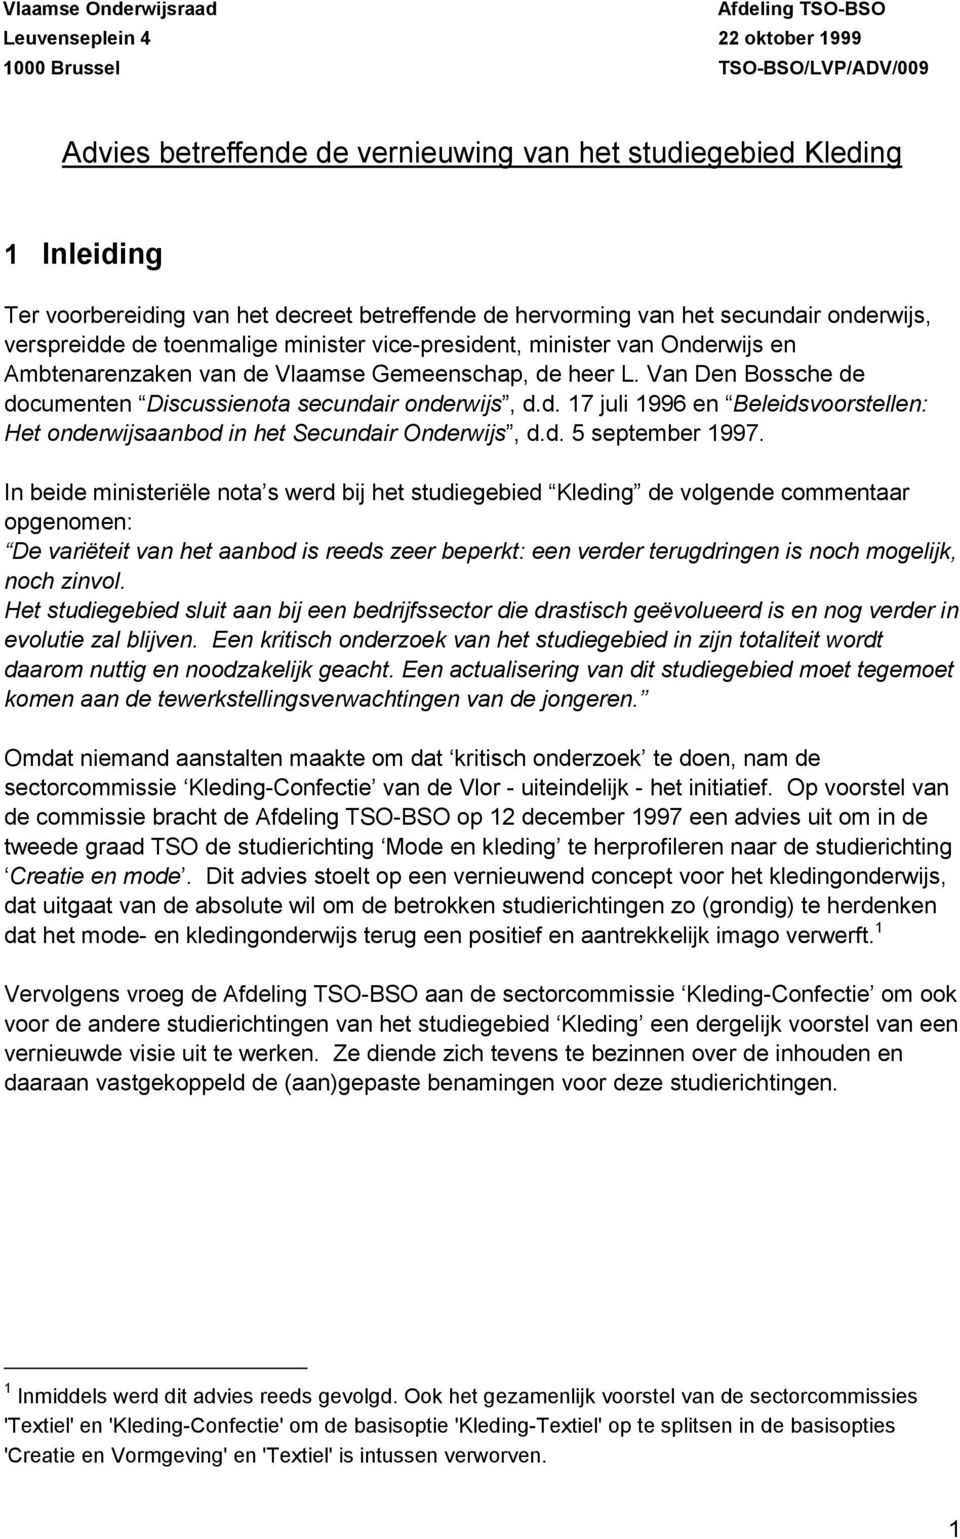 L. Van Den Bossche de documenten Discussienota secundair onderwijs, d.d. 17 juli 1996 en Beleidsvoorstellen: Het onderwijsaanbod in het Secundair Onderwijs, d.d. 5 september 1997.